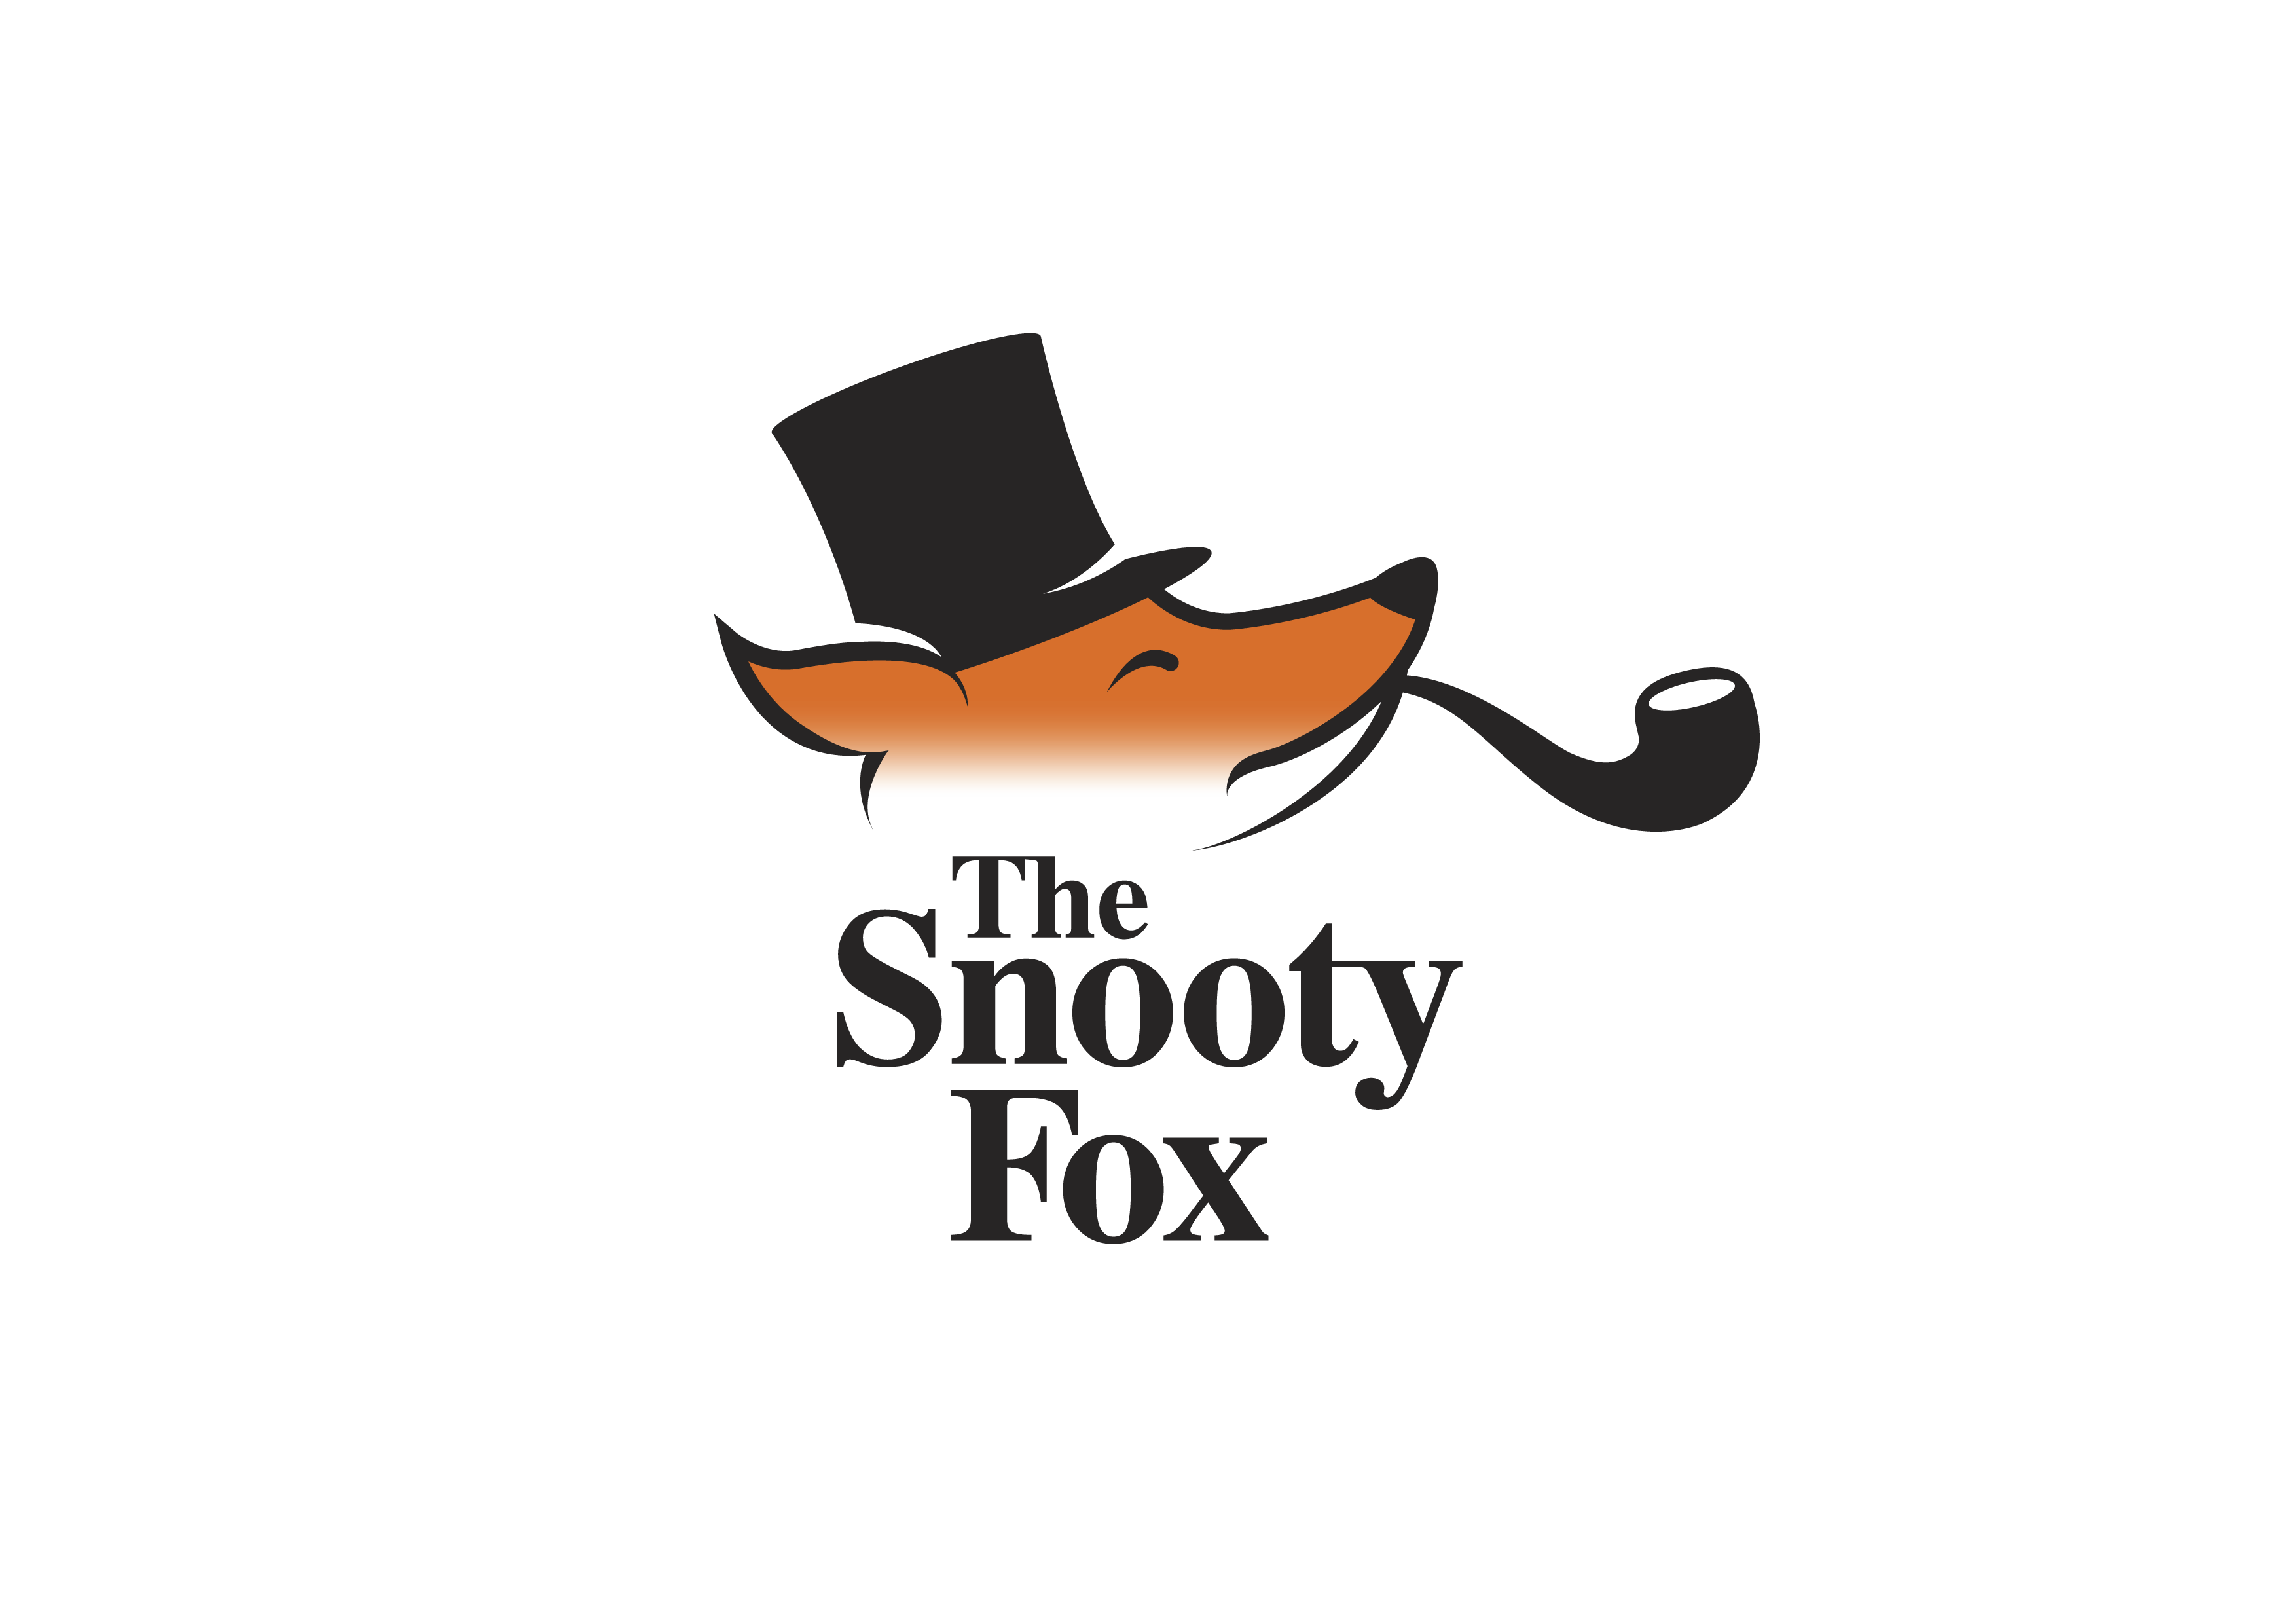 The snooty Fox Lowick logo